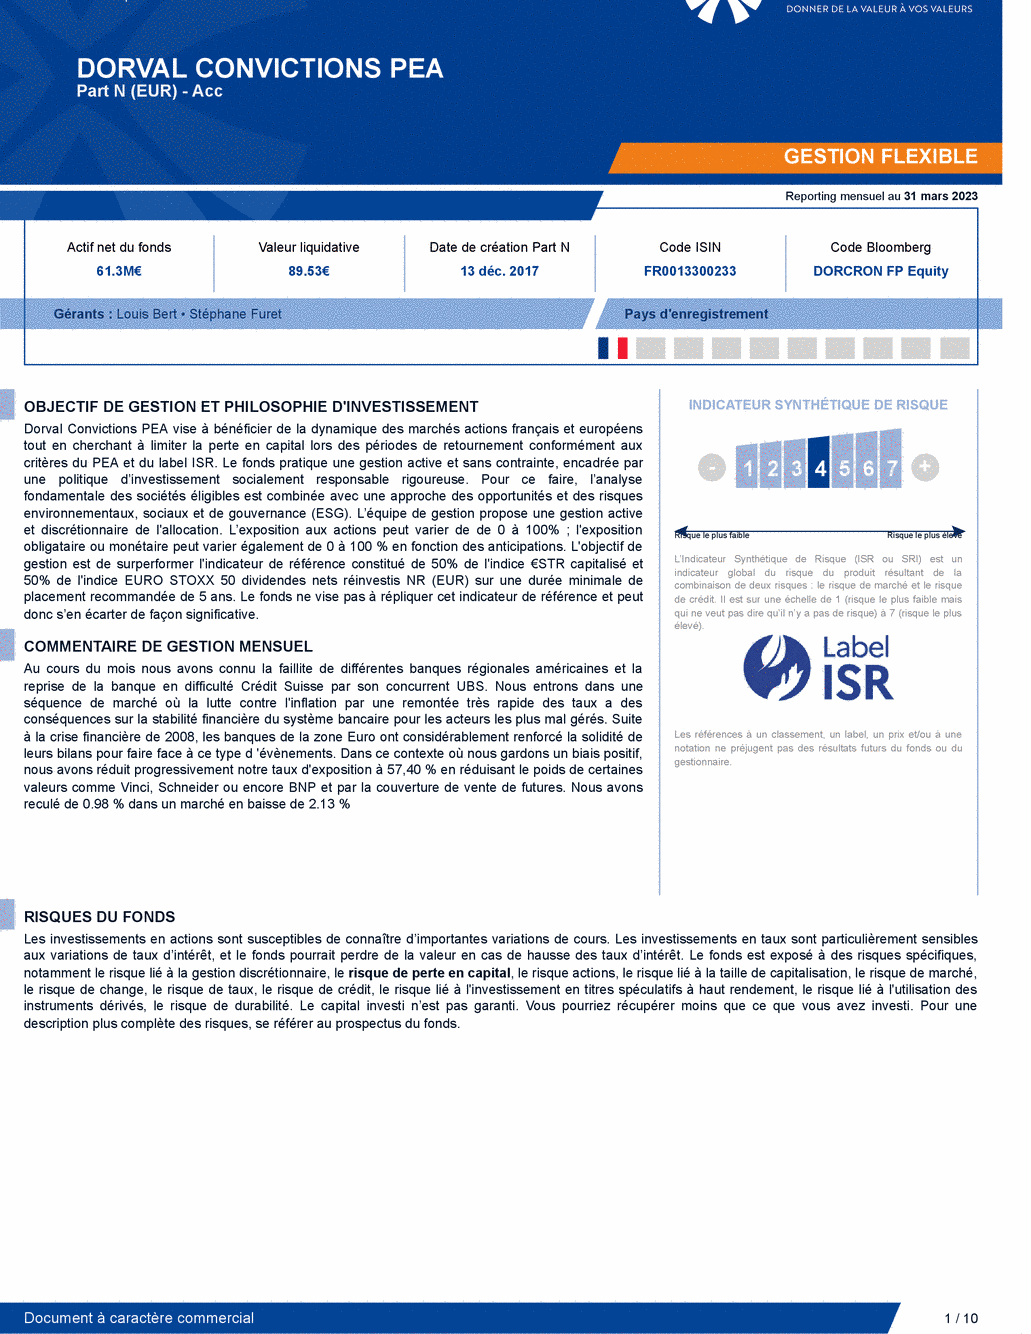 Reporting DORVAL CONVICTIONS PEA Part N - 31/03/2023 - Français